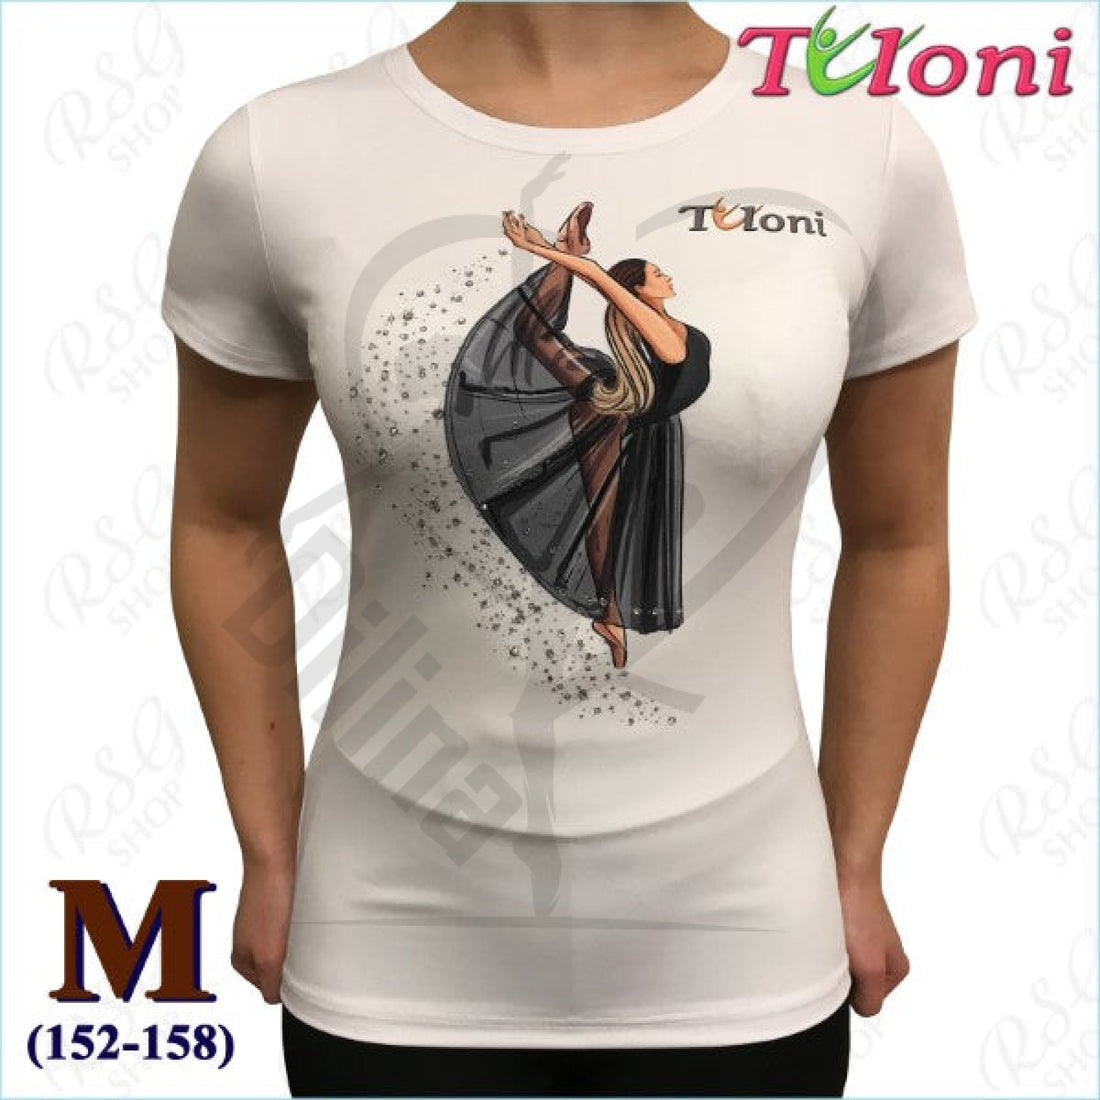 Tuloni White T-Shirt Mod. Ballet M (152-158) T Shirts & Tops